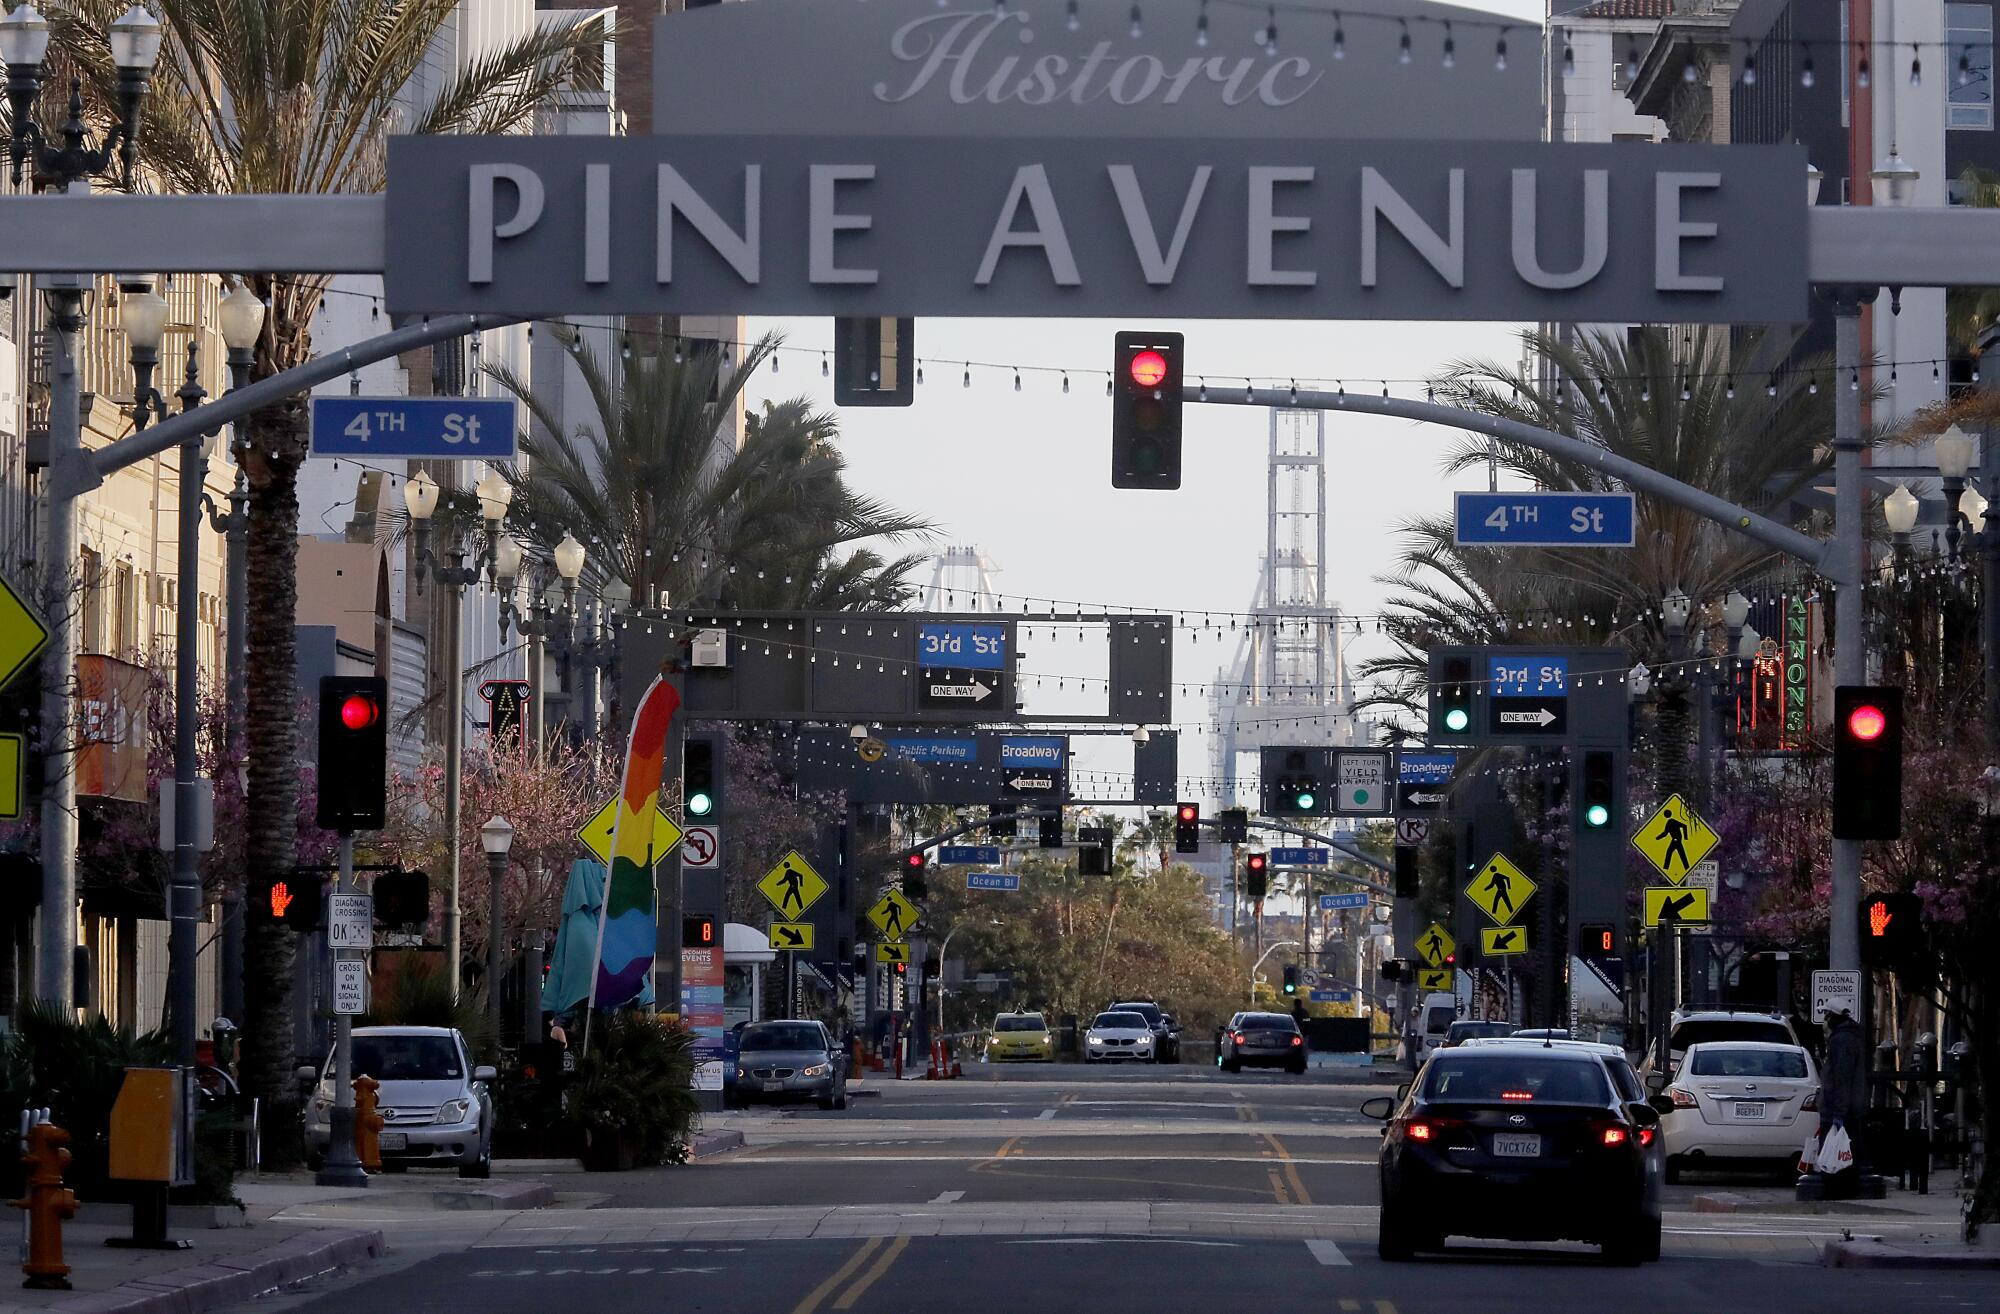 Pine Avenue in downtown Long Beach